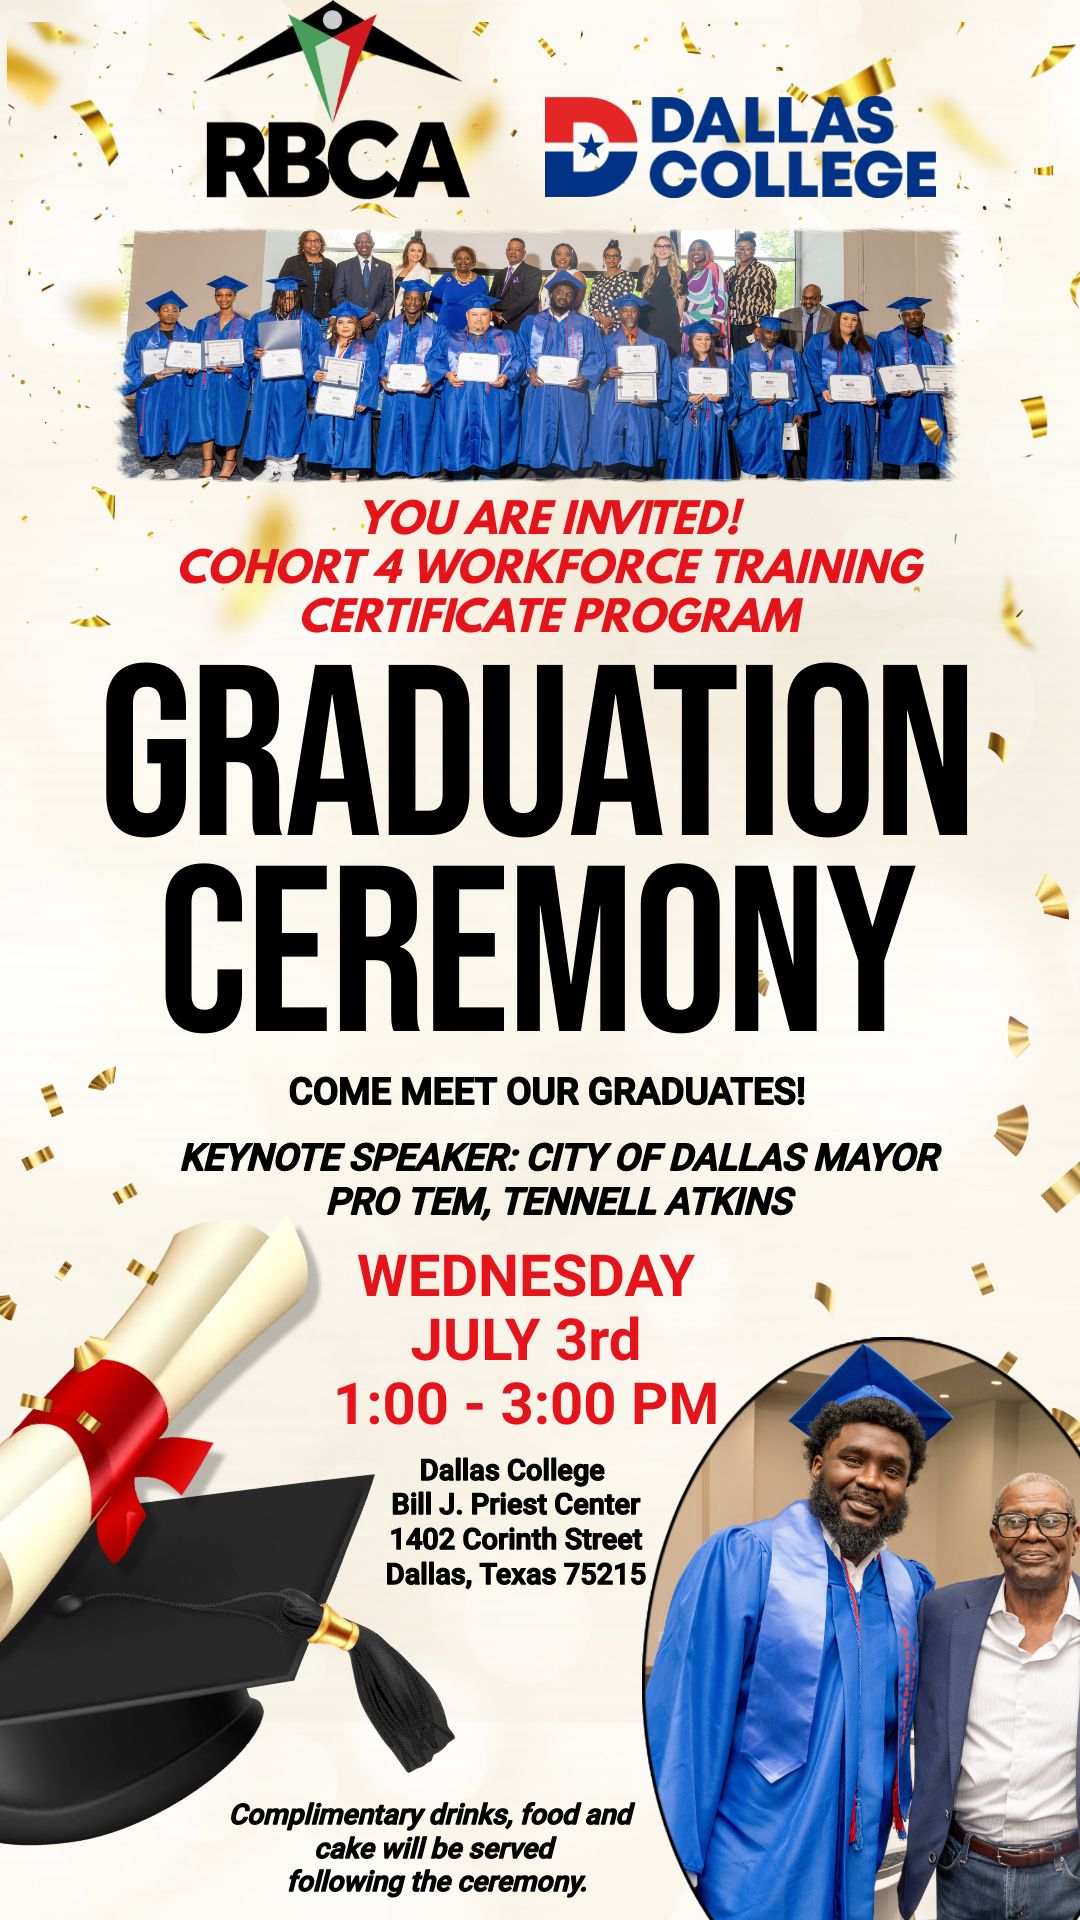 RBCA & Dallas College Workforce Training Certificate Program Graduation Ceremony Cohort 4